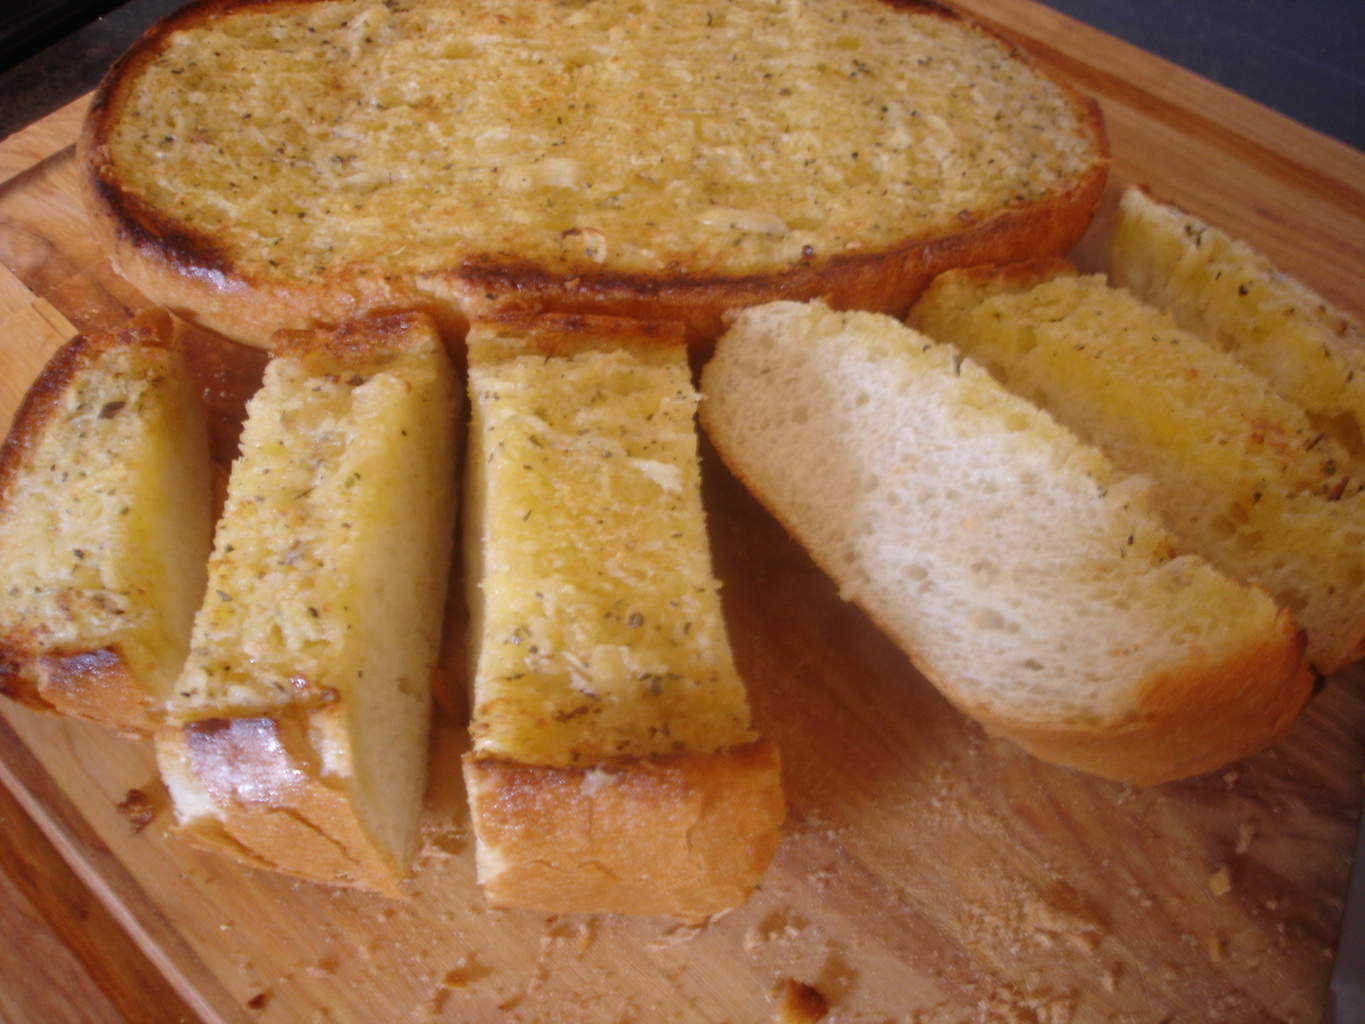 https://syrupandbiscuits.com/wp-content/uploads/2011/09/garlic-bread-apple-dapple-004.jpg